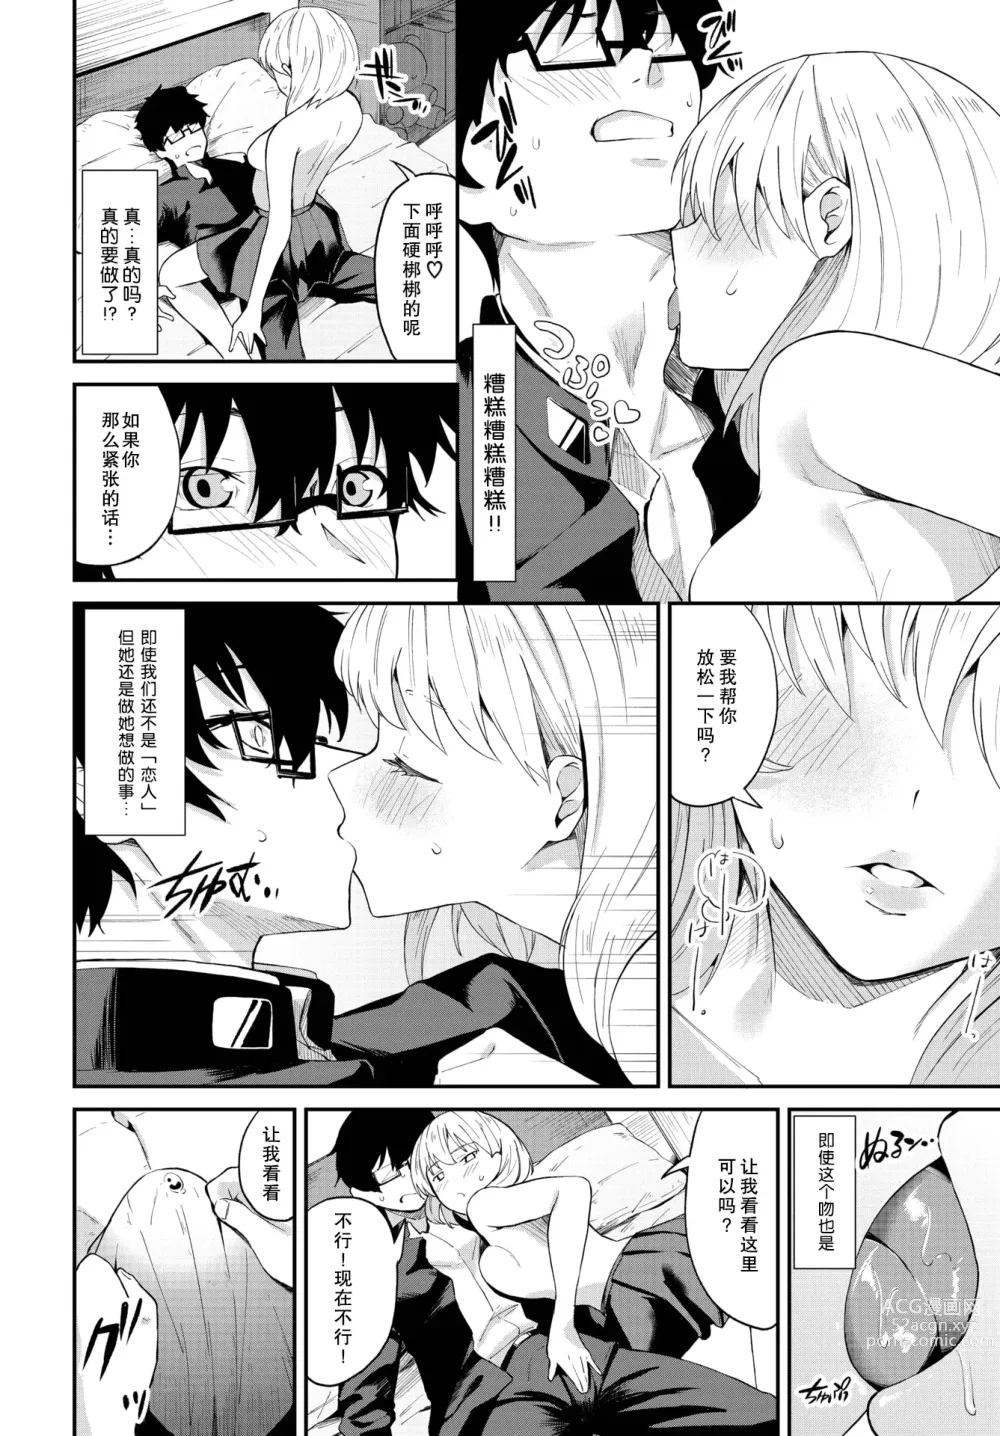 Page 7 of manga koi domari